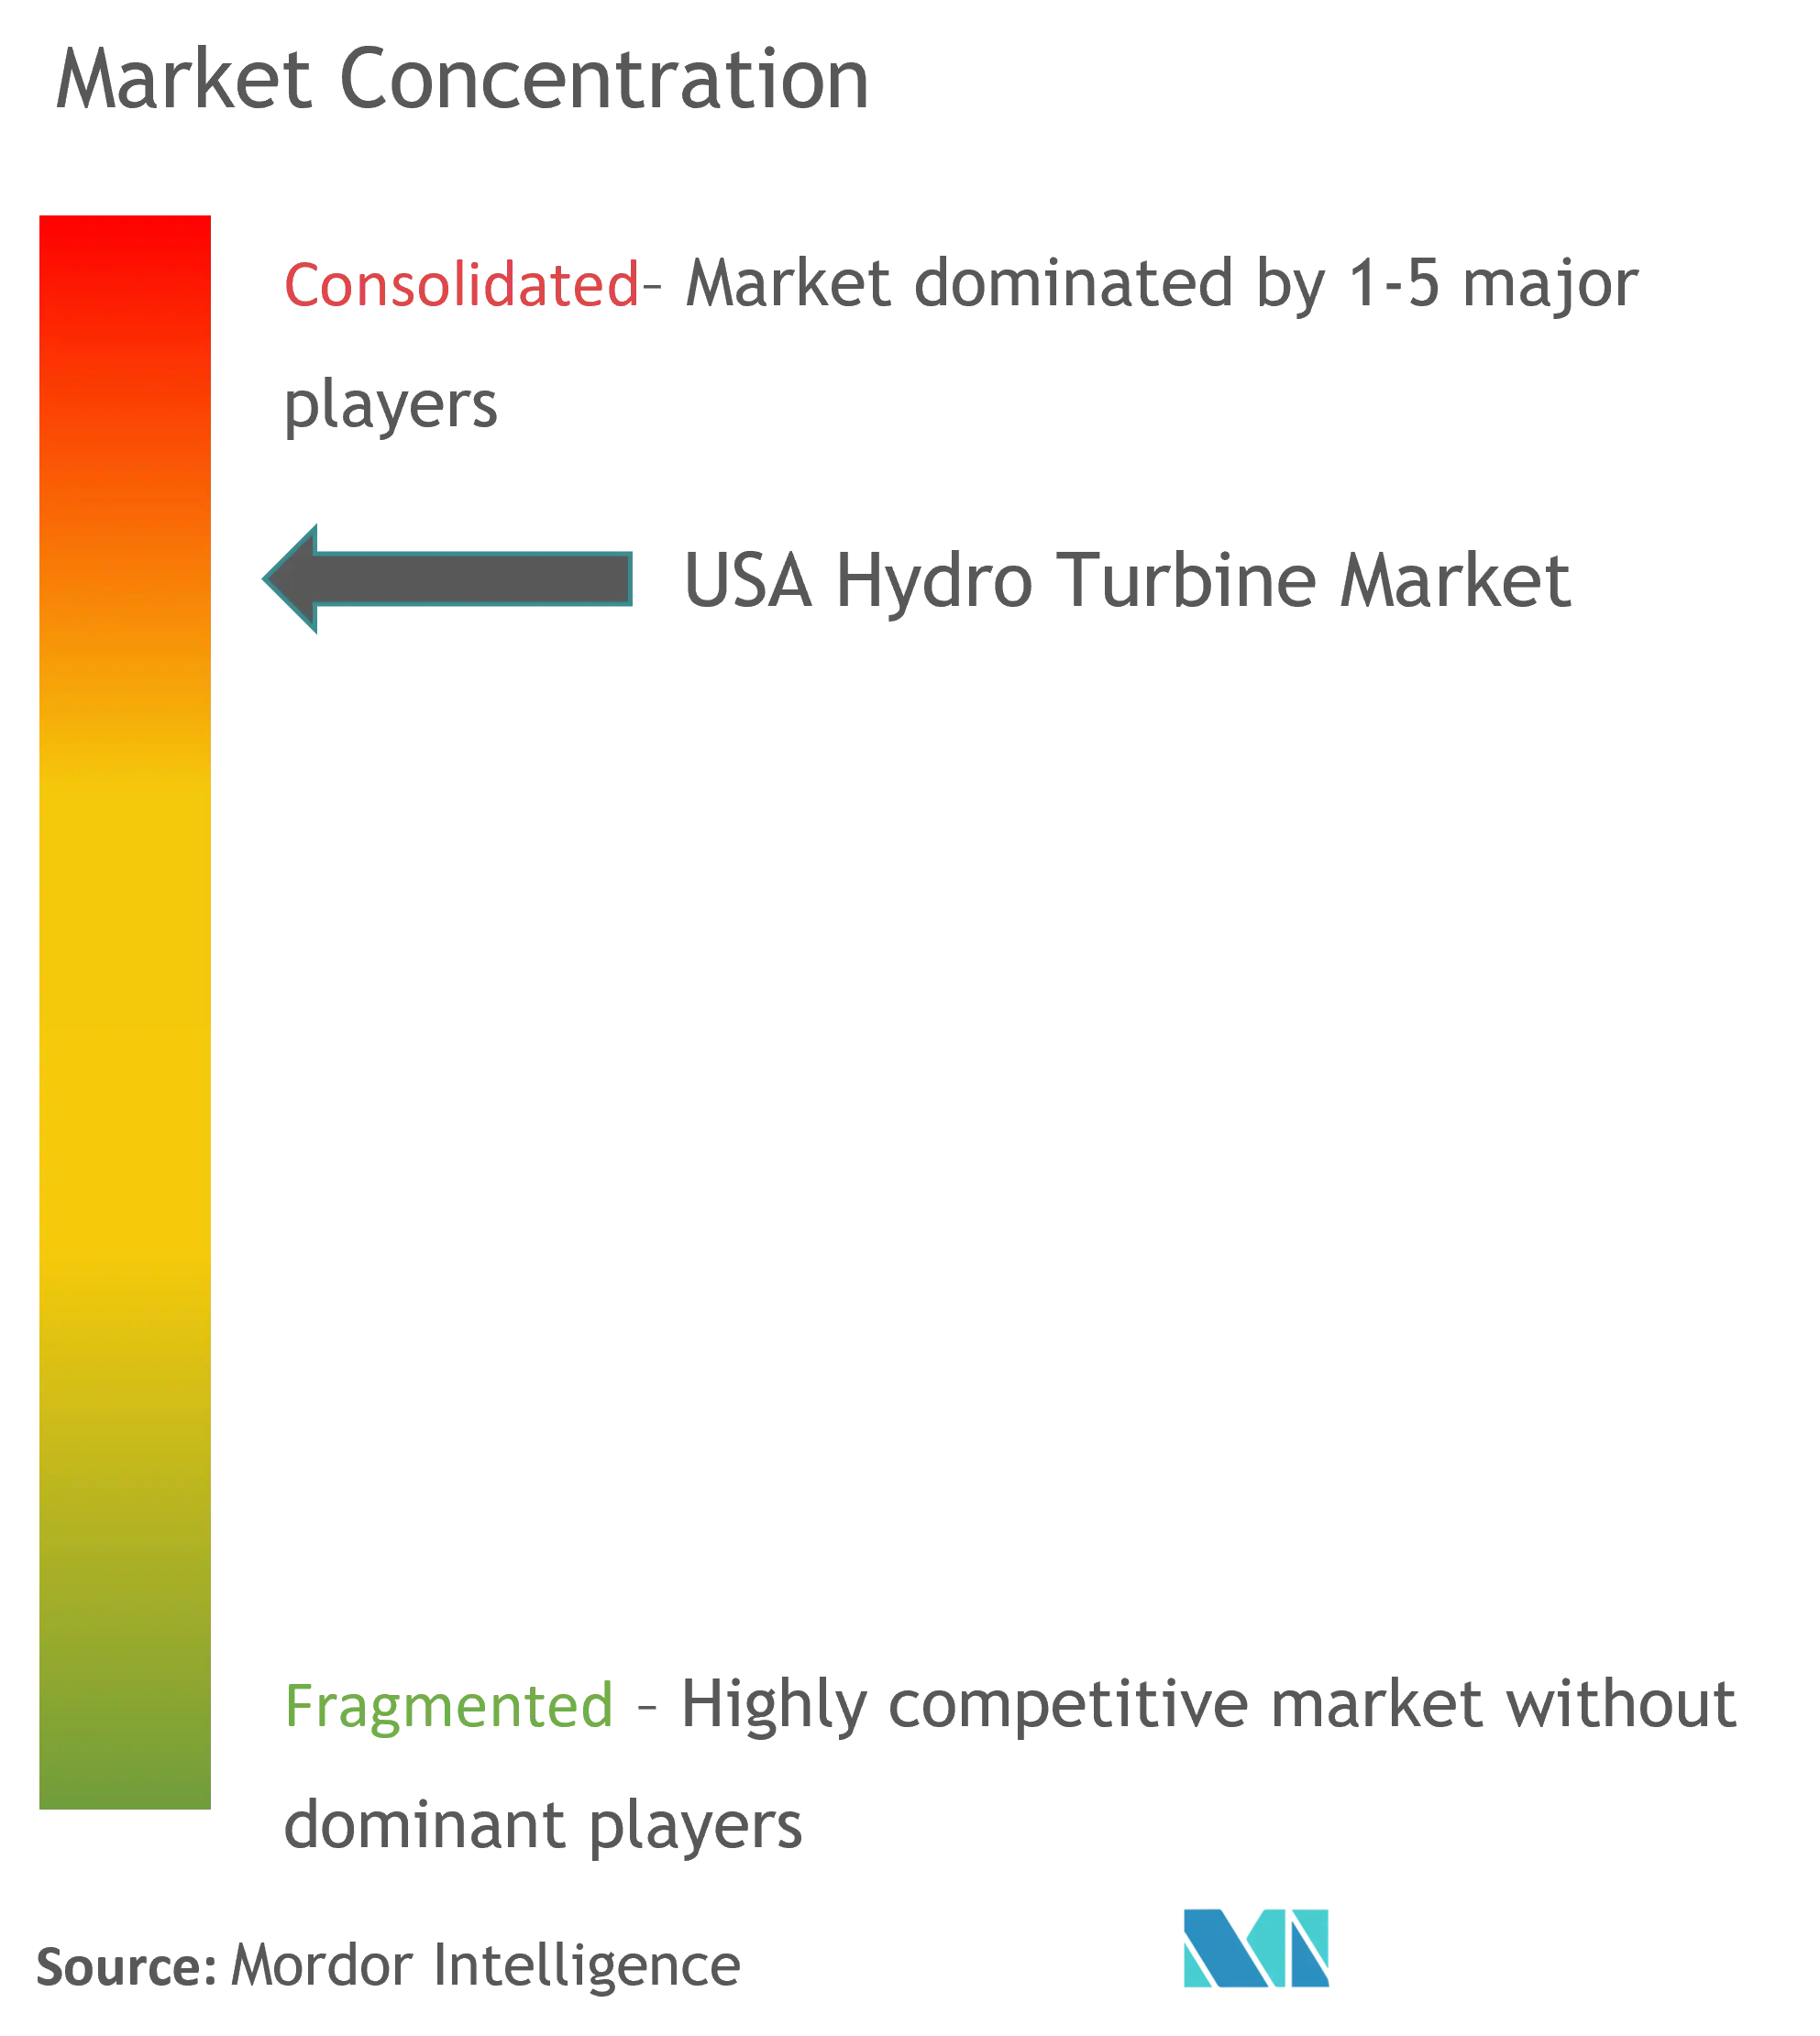 Market Concentration-USA Hydroturbine Market.png